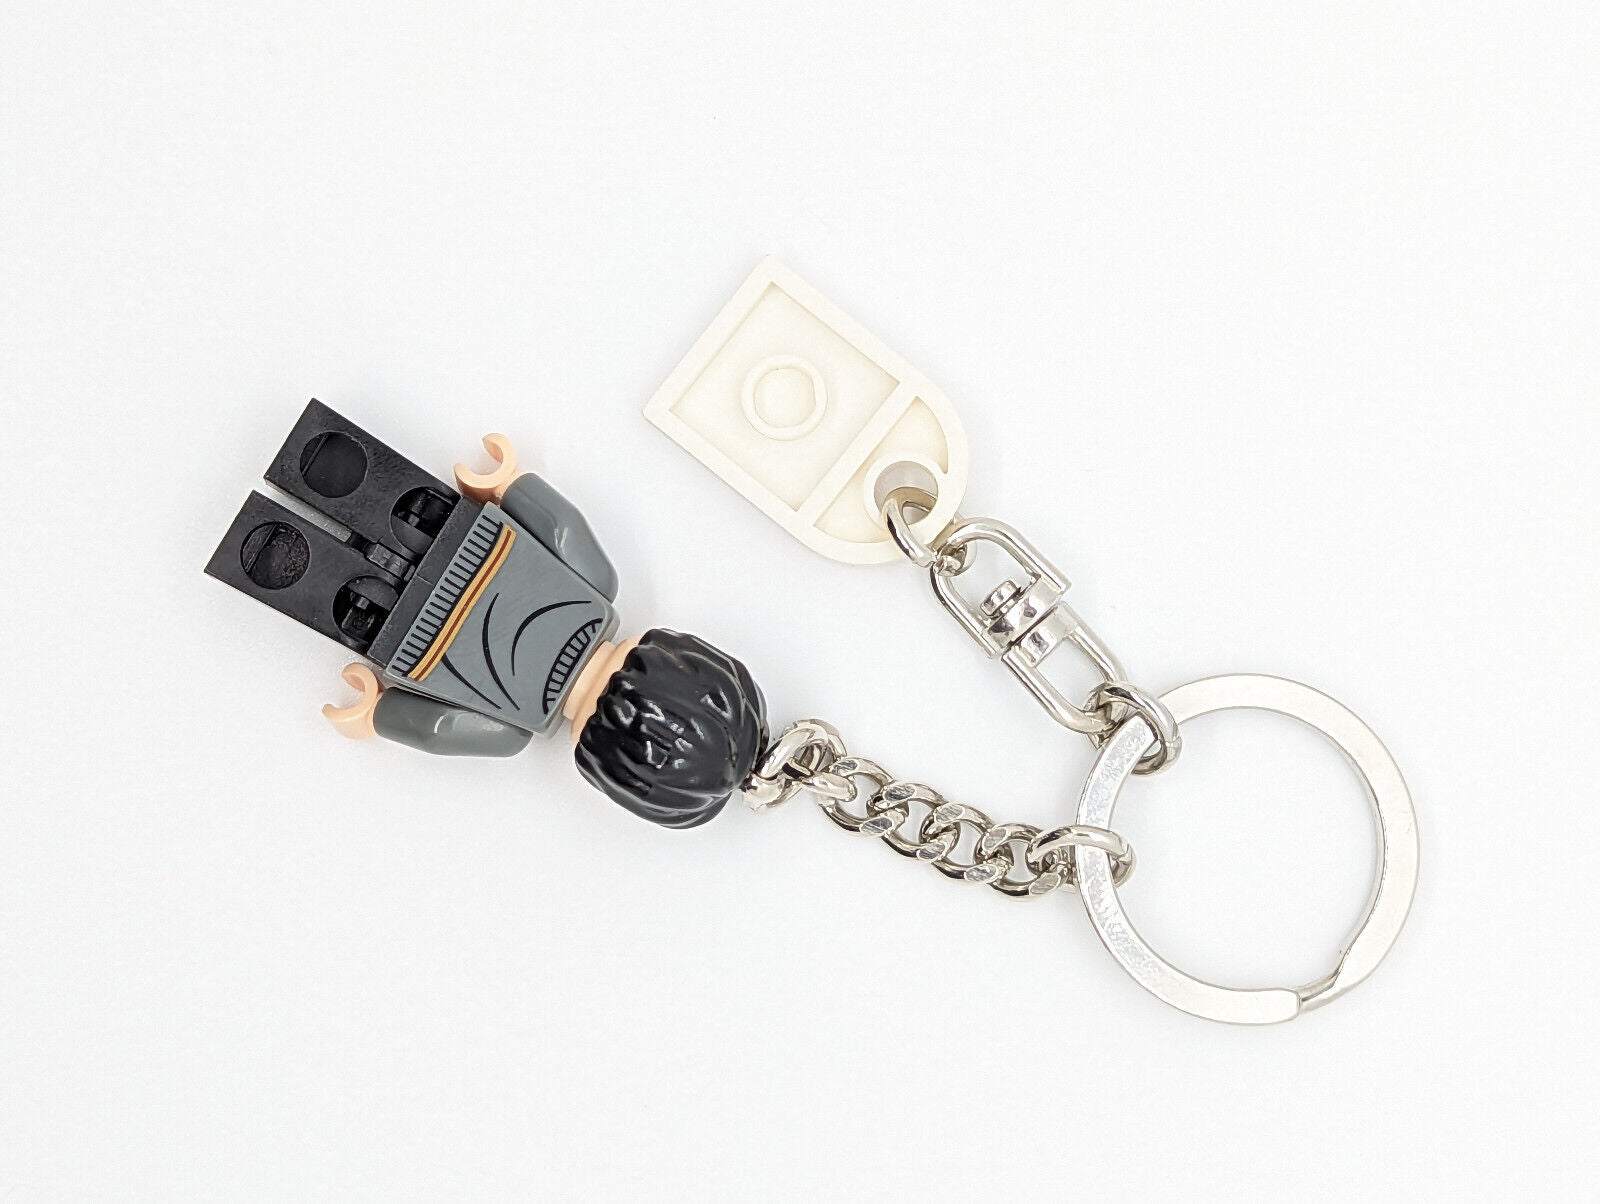 Lego Minifigure Key Chain - Harry Potter Gryffindor Crest - 852954